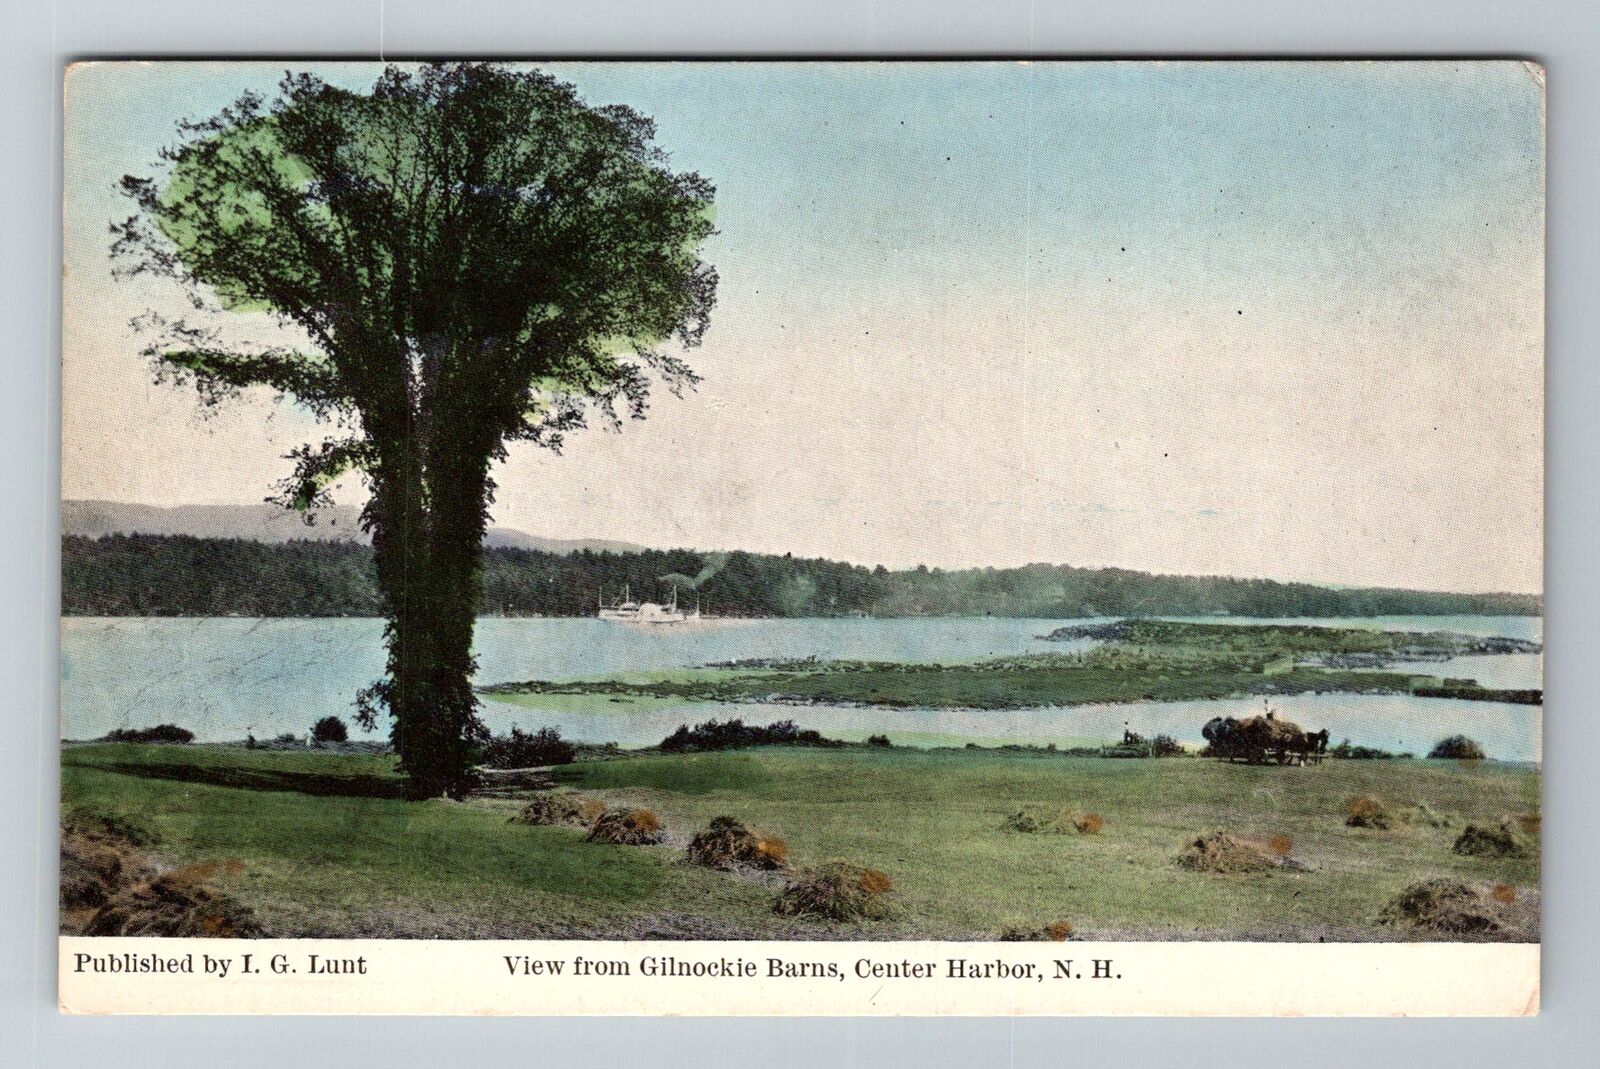 Center Harbor NH-New Hampshire, Gilnockie Barns, Antique, Vintage Postcard